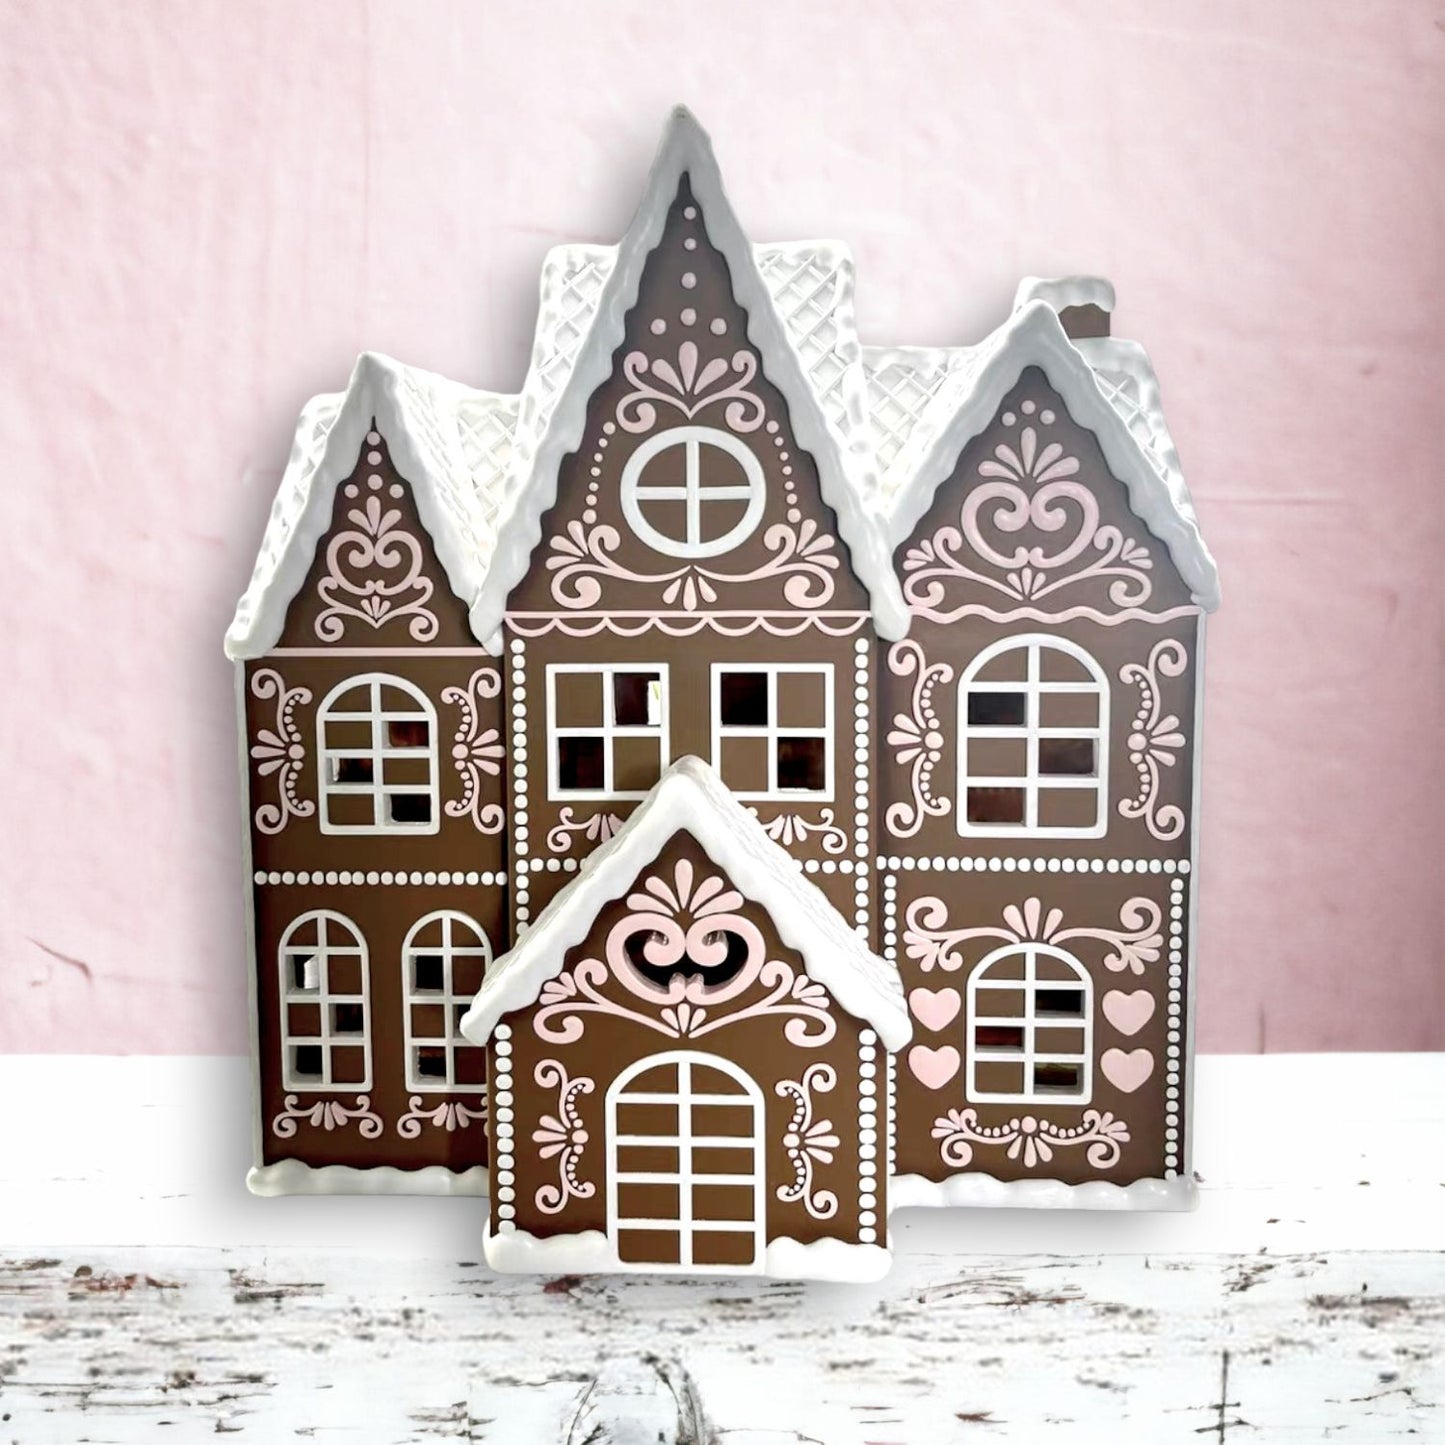 December Diamonds Gingerbread Village 36-Inch Led Gingerbread Display House